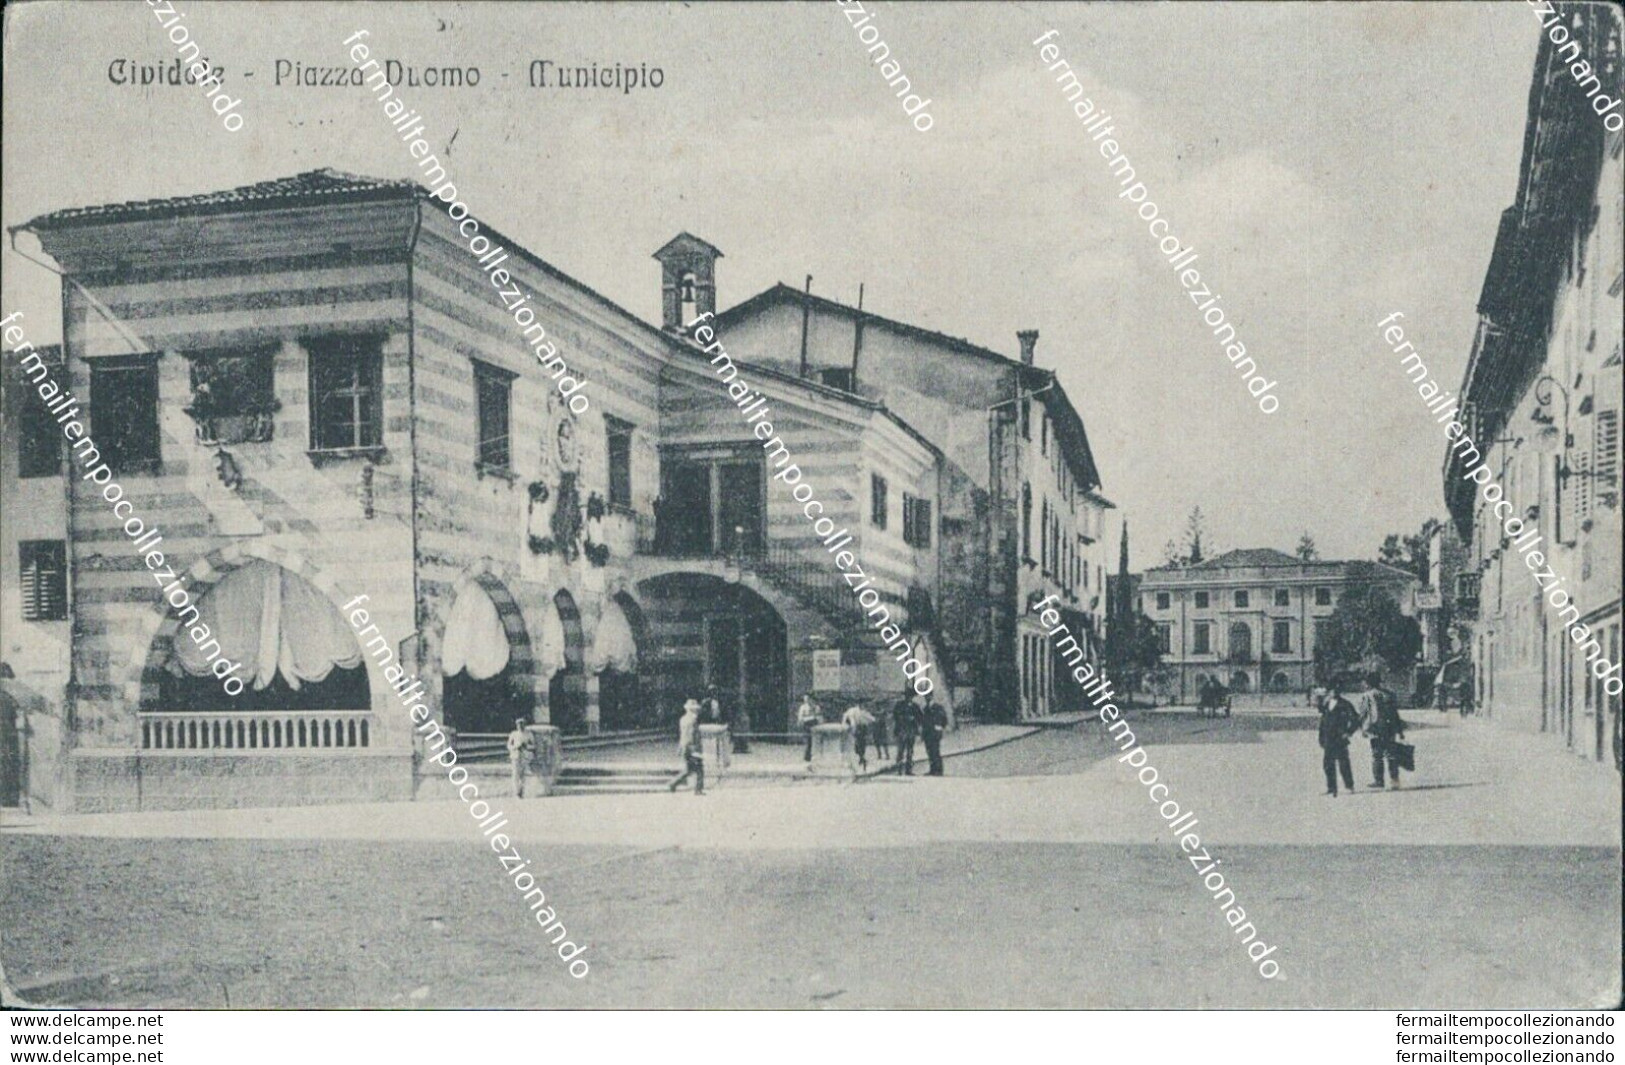 Bc59 Cartolina Cividale Piazza Duomo Municipio Udine 1915 - Udine